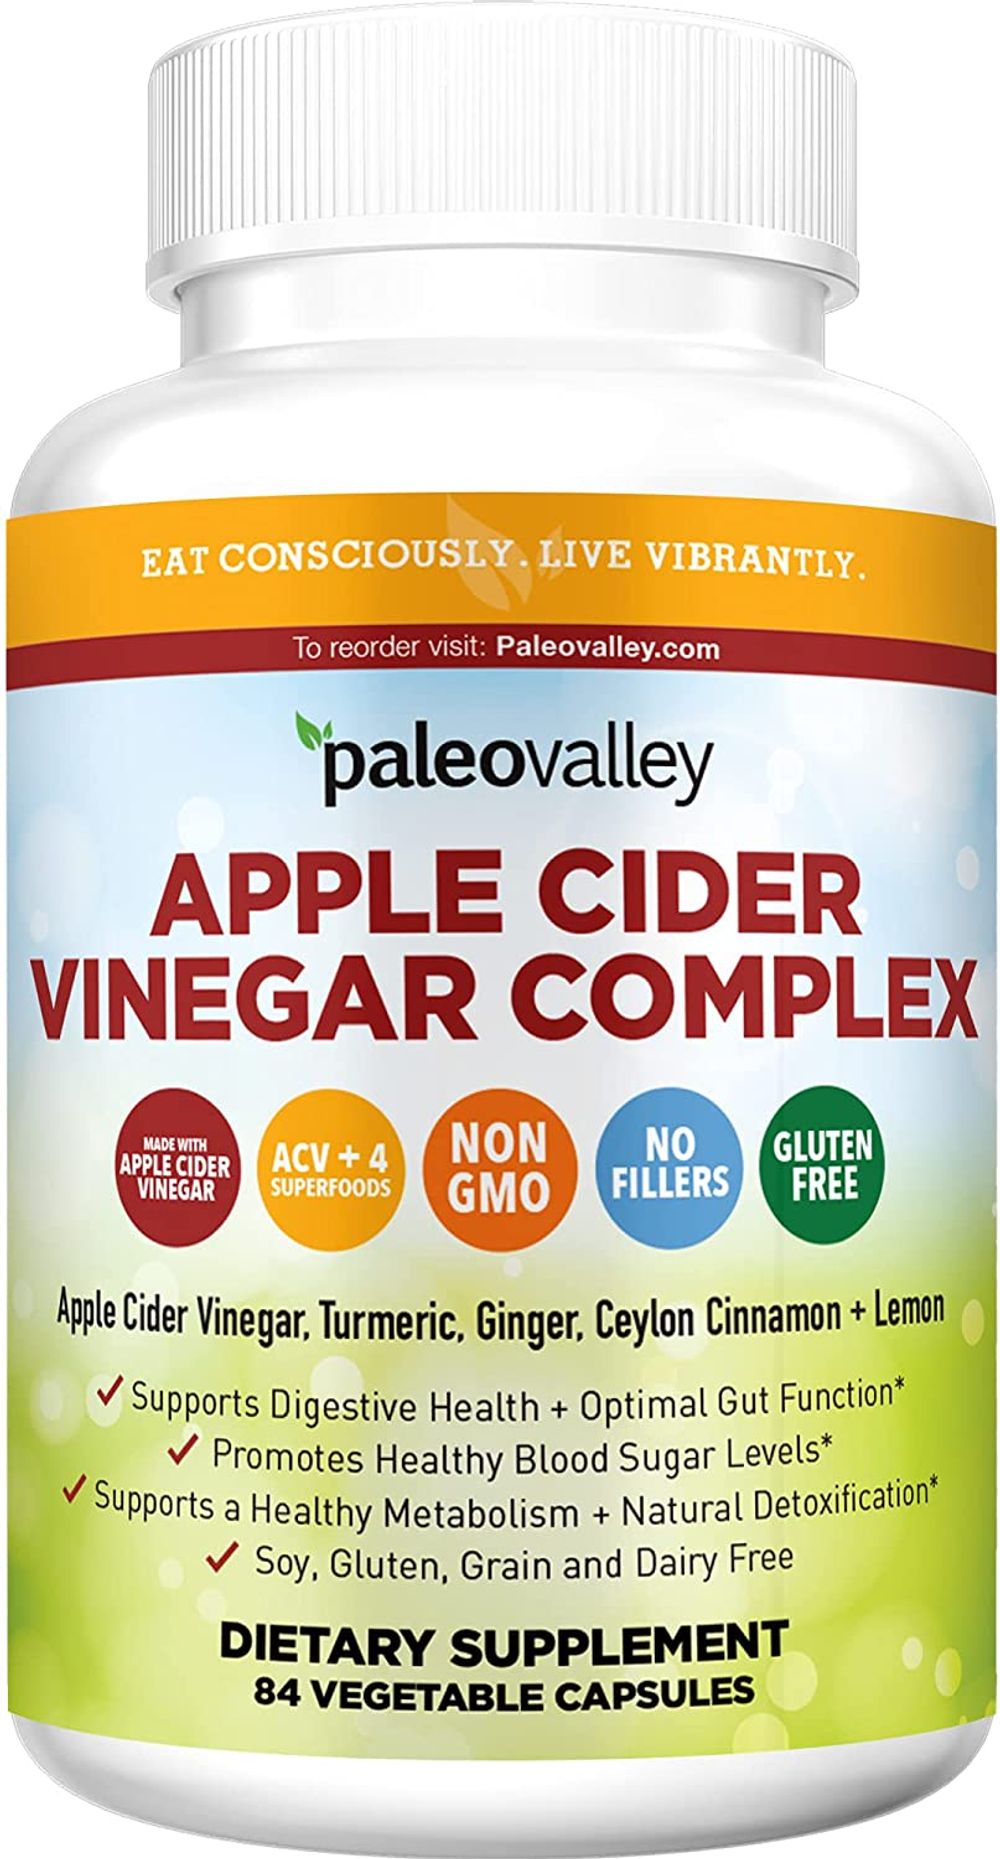 Paleovalley: Apple Cider Vinegar Complex